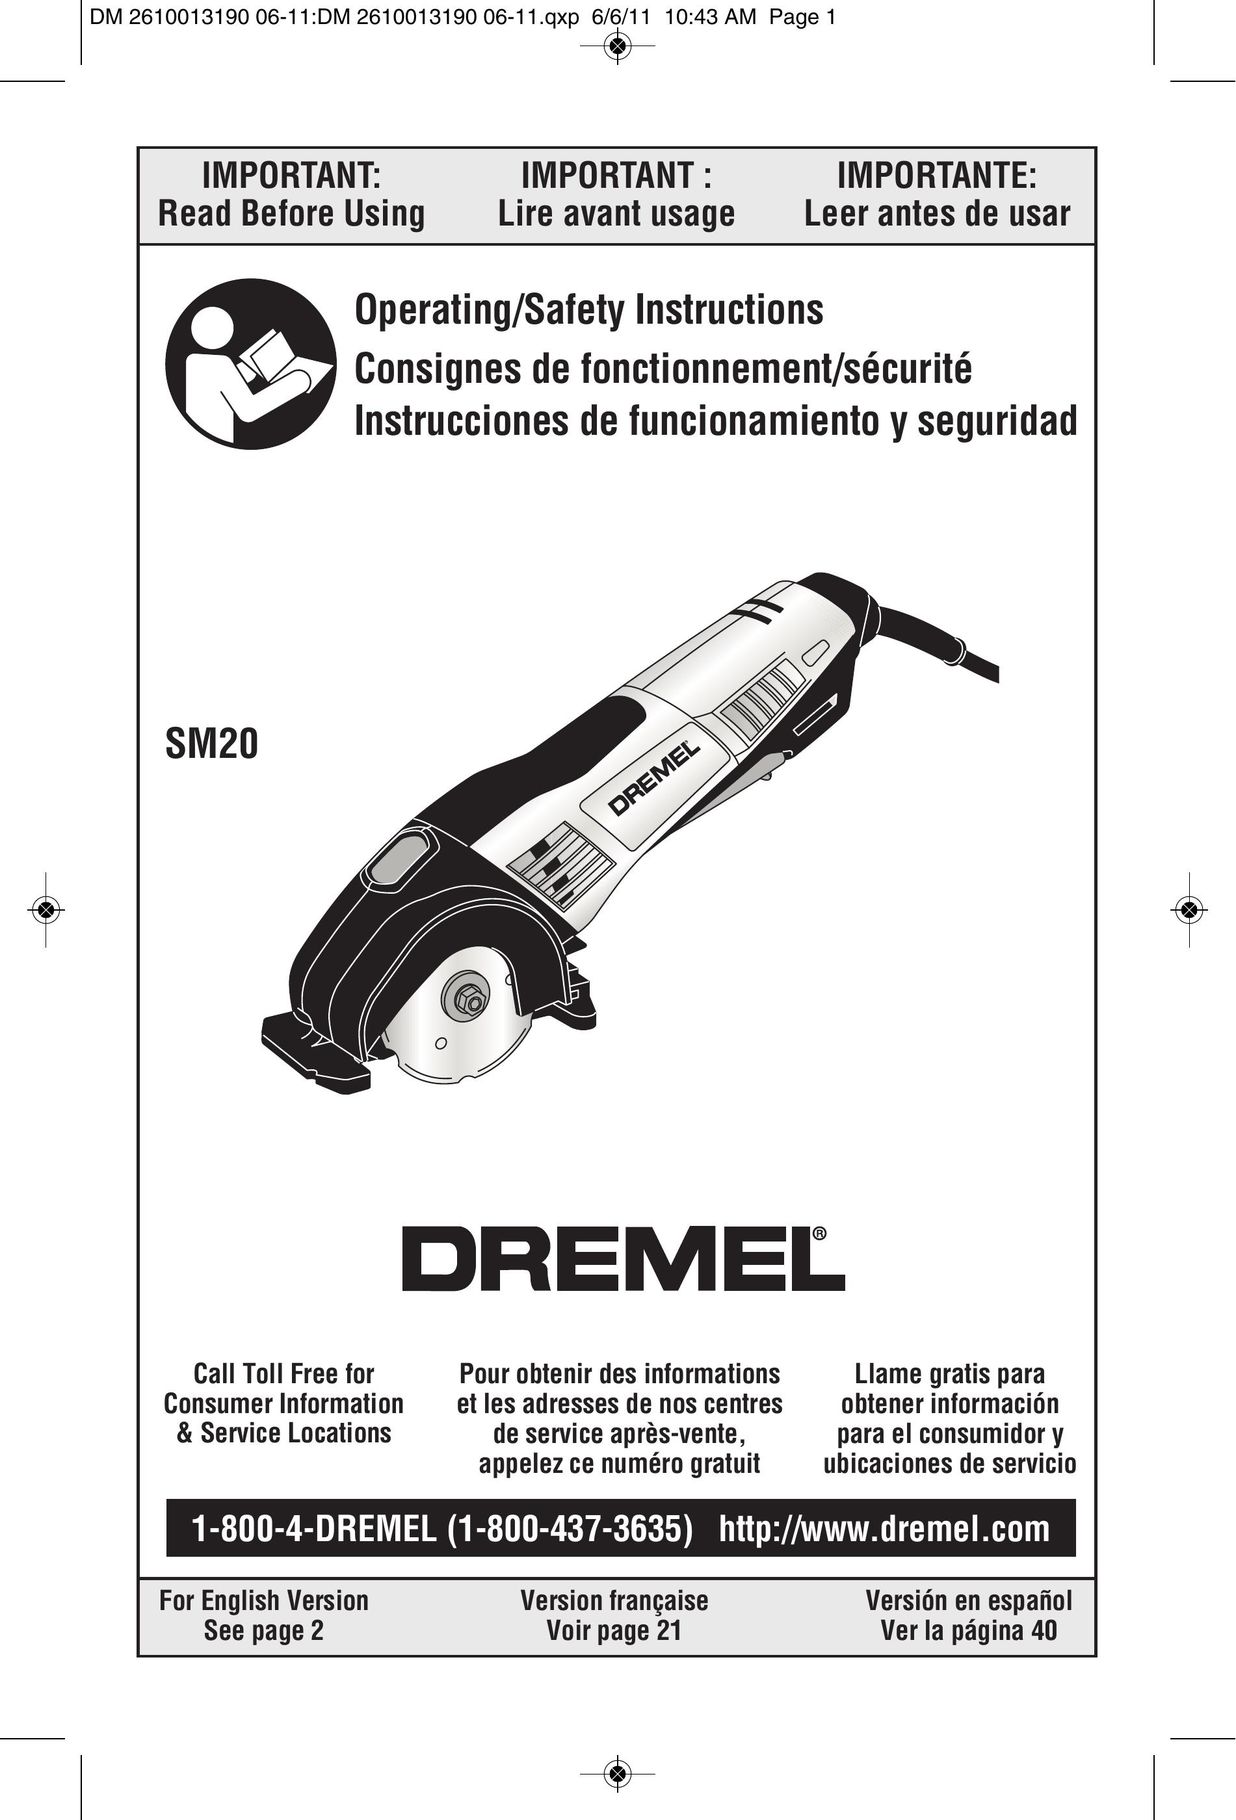 Dremel SM20 Cordless Drill User Manual